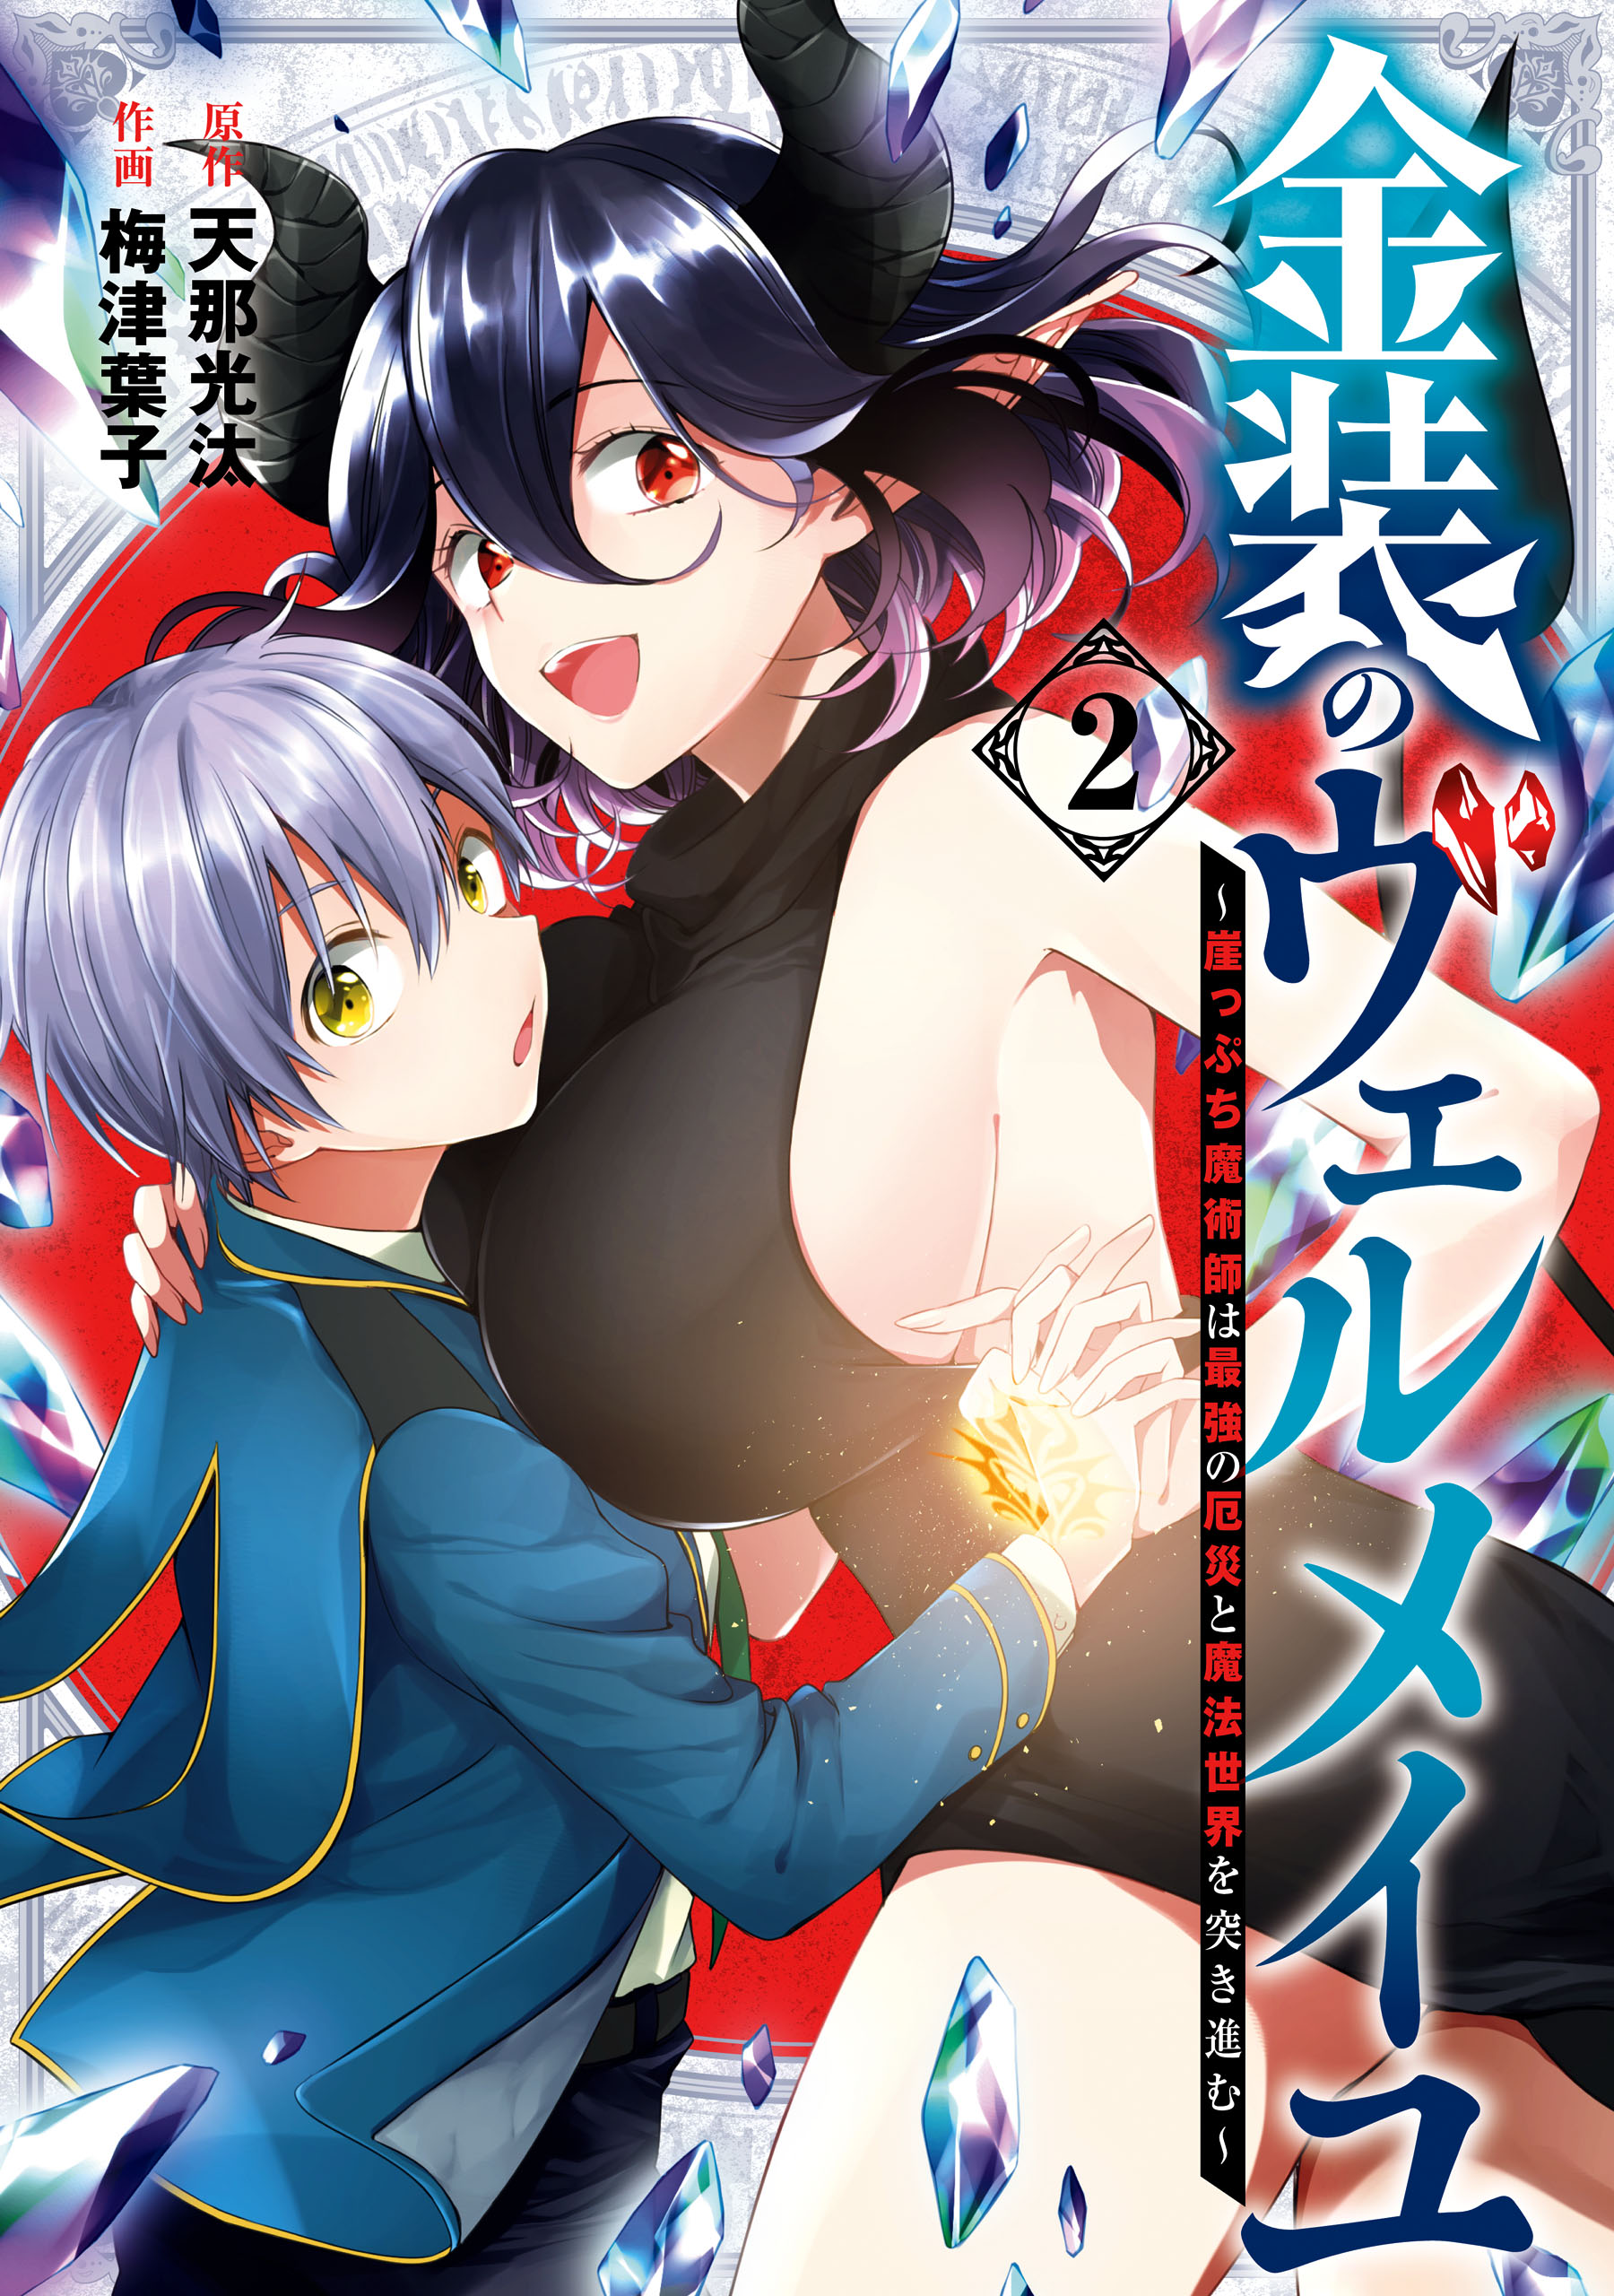 Kinsō no Vermeil Magical Romantic Comedy Manga Gets TV Anime in